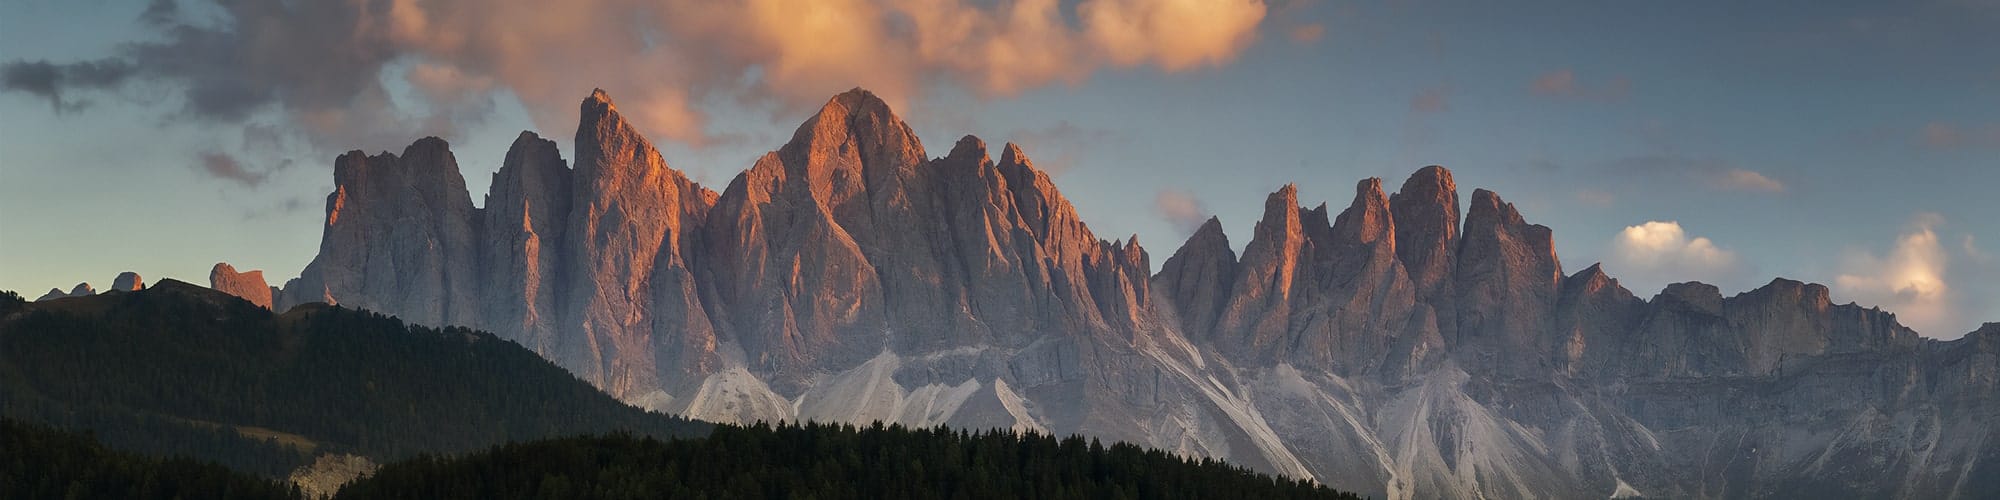 Voyage liberté Dolomites © DieterMeyrl